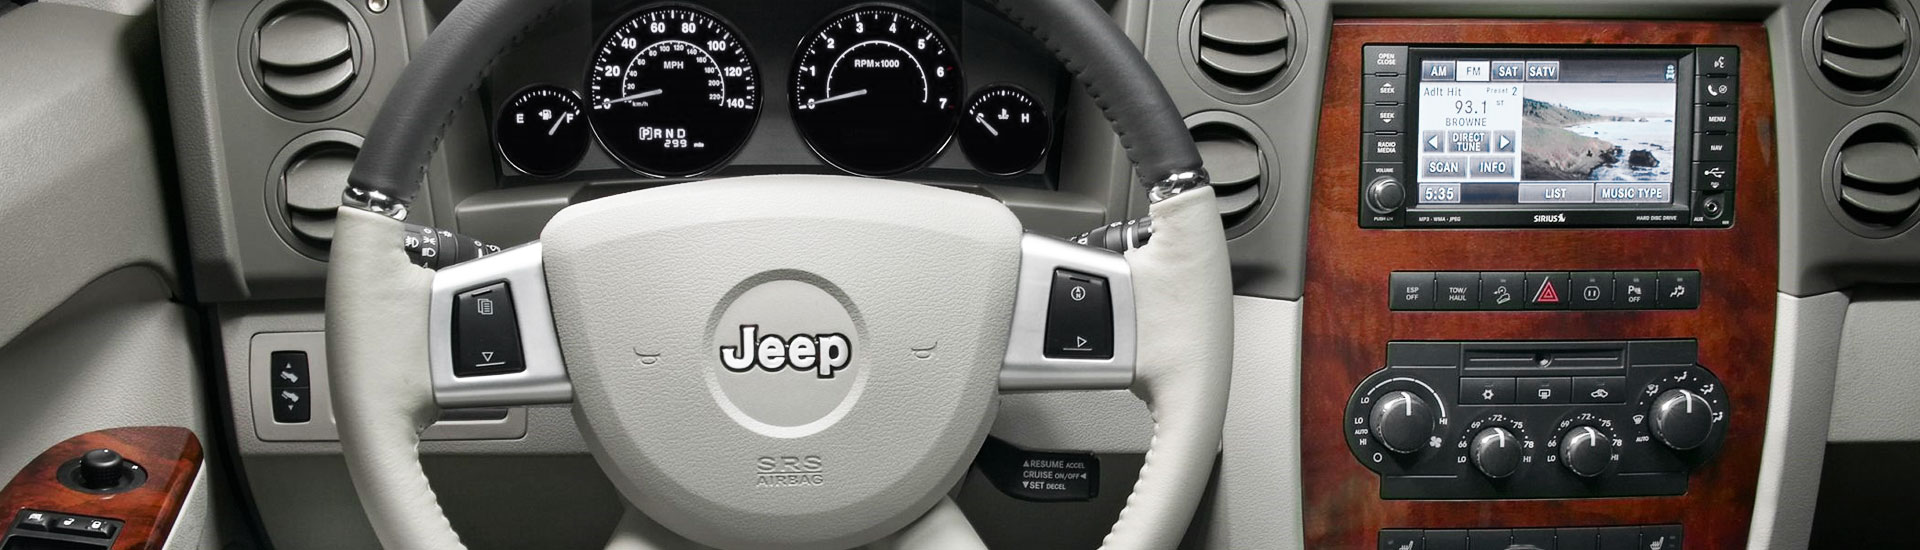 2015 Jeep Patriot Custom Dash Kits